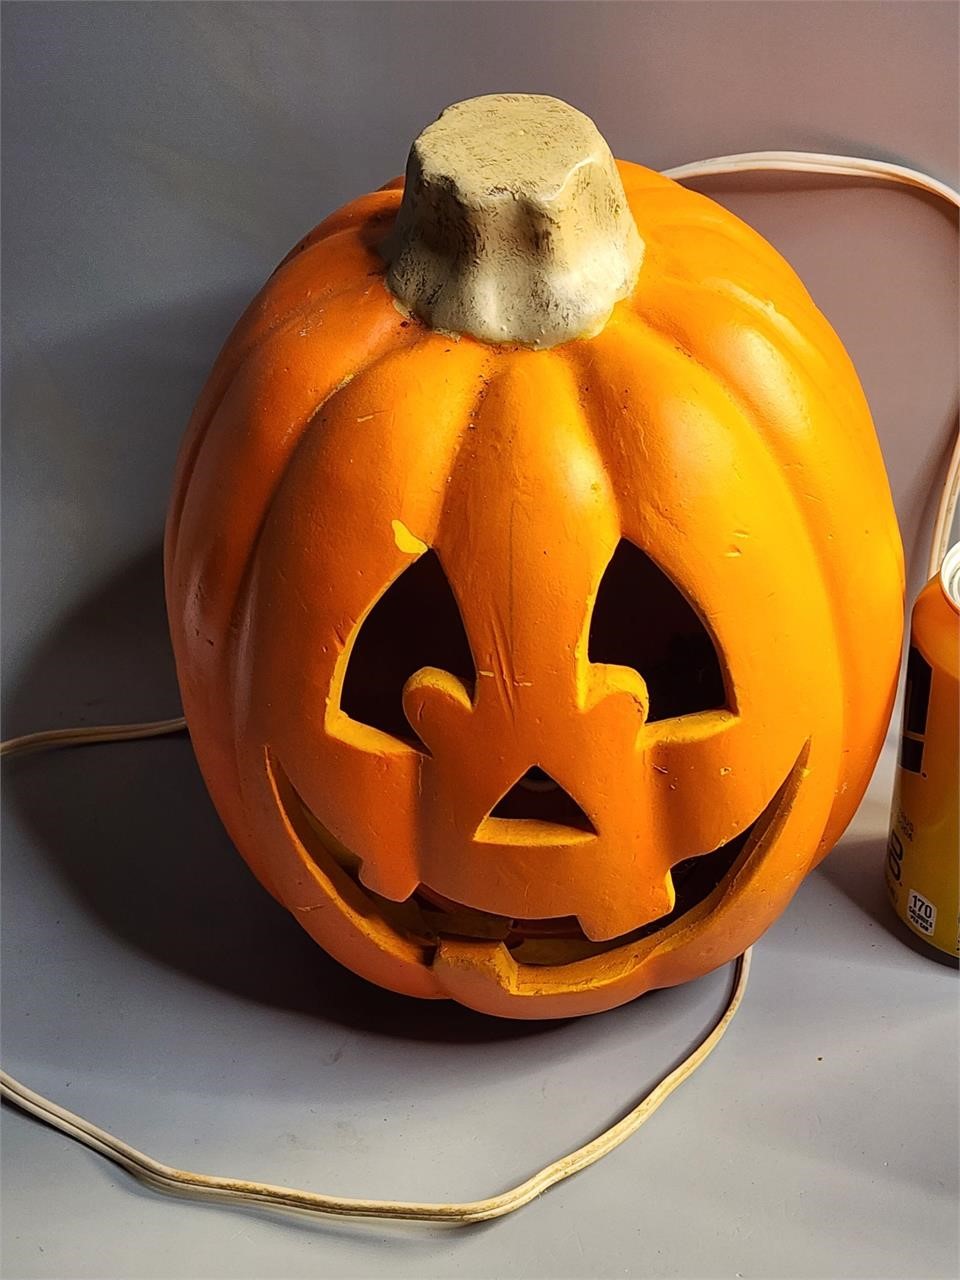 Pumpkin Halloween decoration